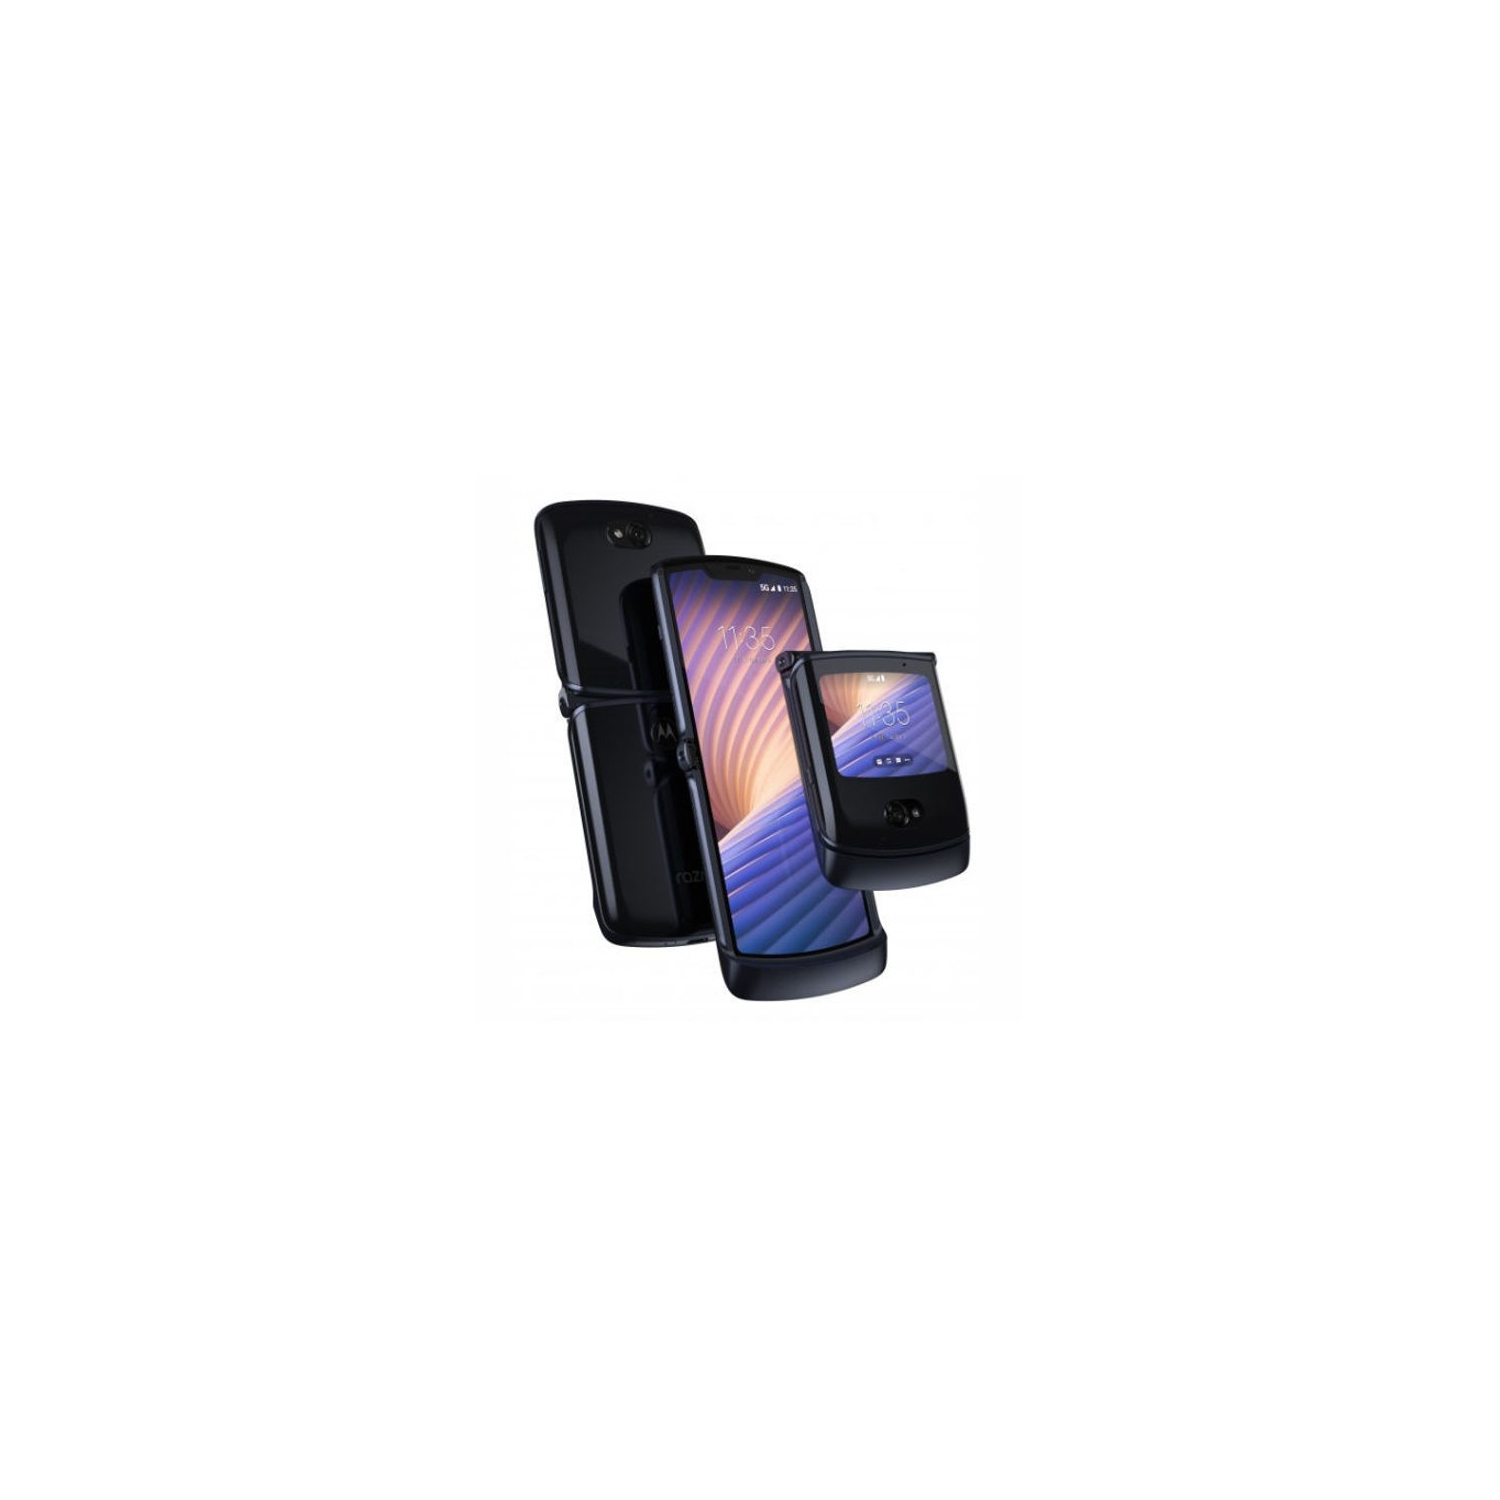 Refurbished (Excellent) - Motorola Razr Unlocked Android Smartphone - Black - Certified Refurbished (Like New)